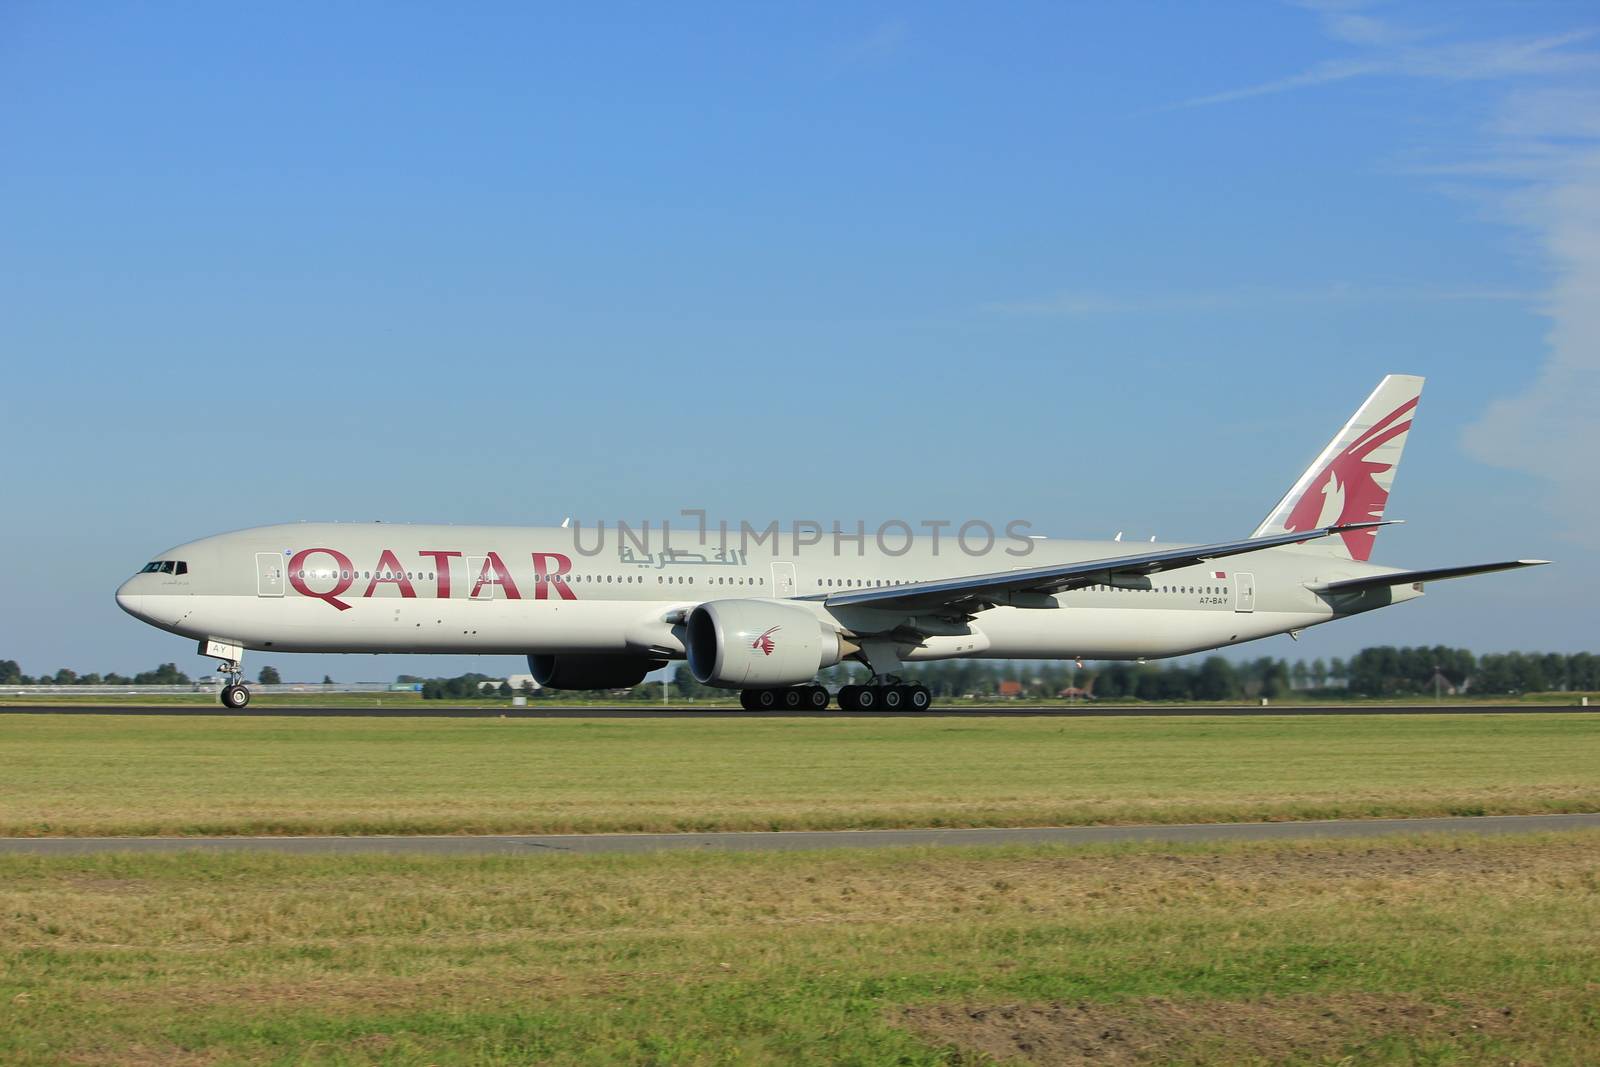 Amsterdam, the Netherlands  - August, 18th 2016: A7-BAY Qatar Airways Boeing 777,
taking off from Polderbaan Runway Amsterdam Airport Schiphol